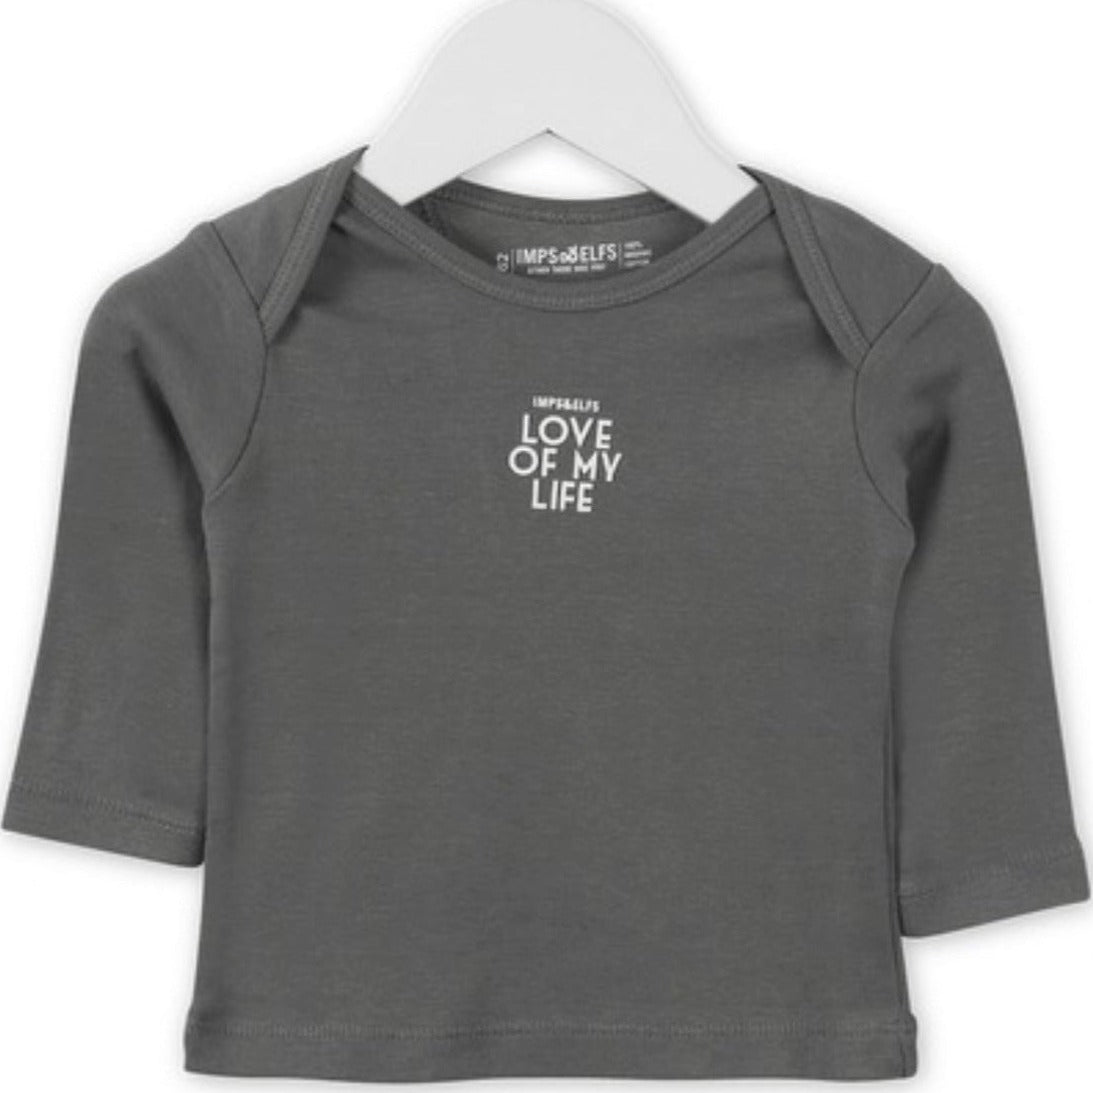 Imps & Elfs Long Sleeve Certified Organic Cotton T-Shirt Sweatshirt With Cute Logos for Mini Girls and Boys 0-9M - CapuletKids